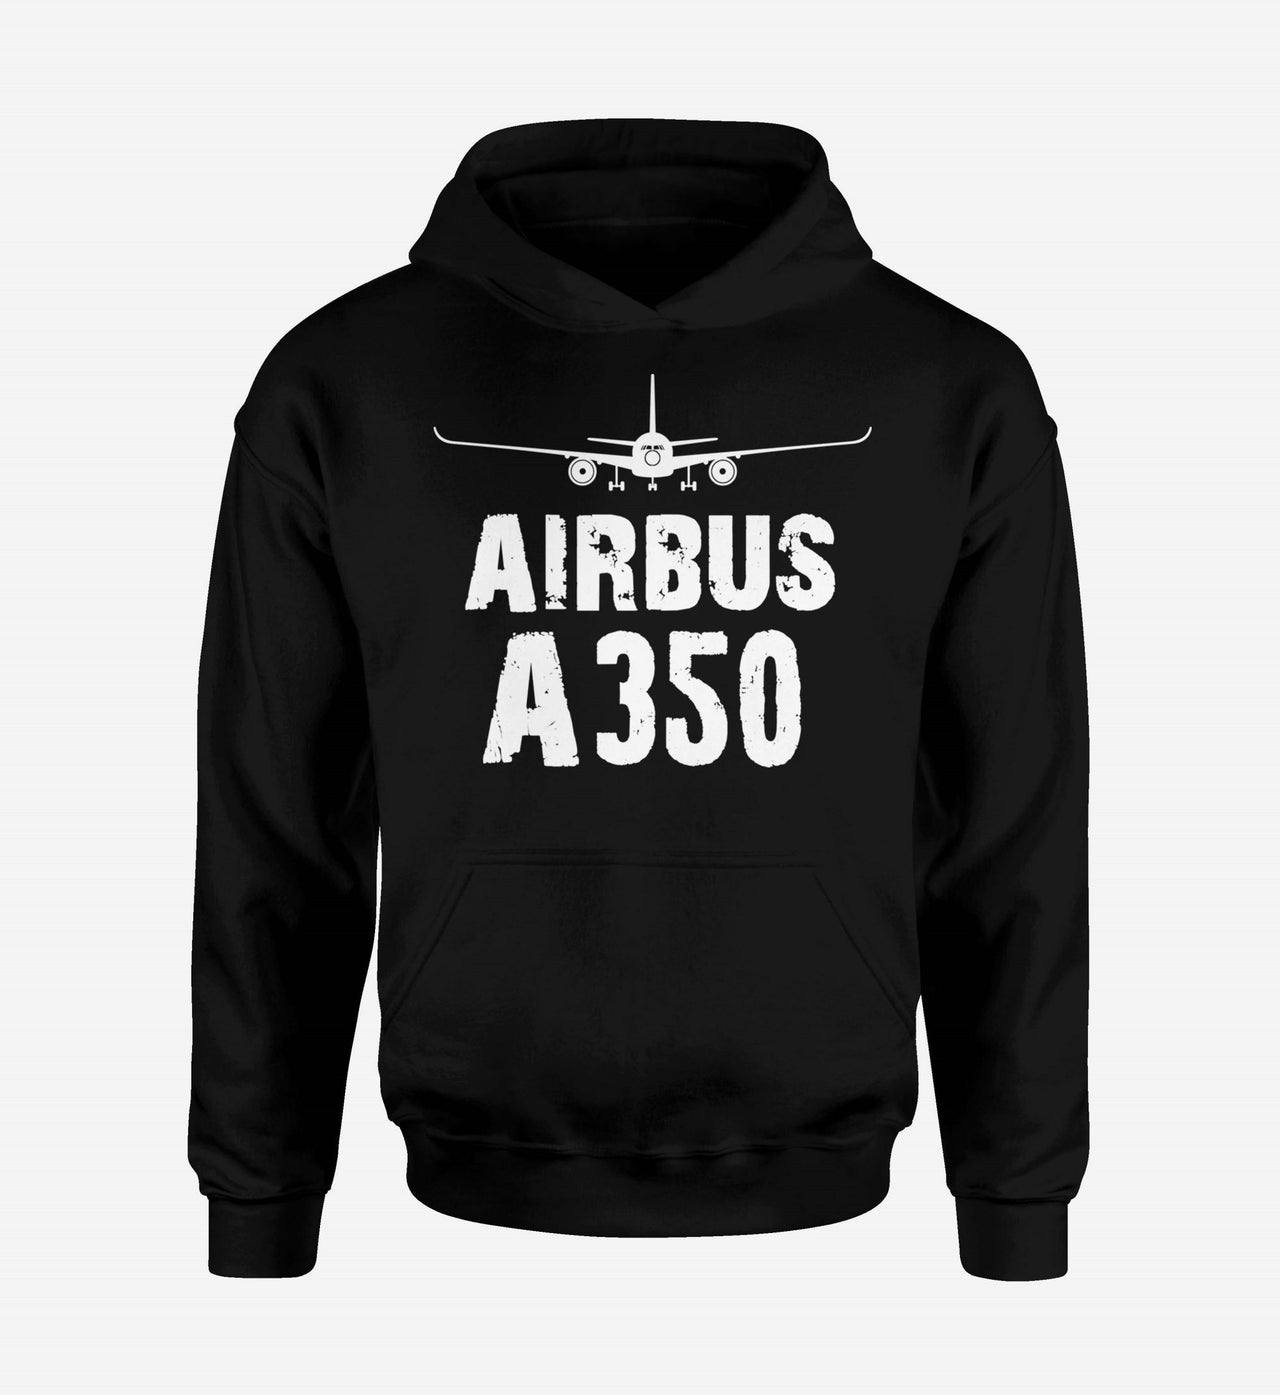 Airbus A350 & Plane Designed Hoodies